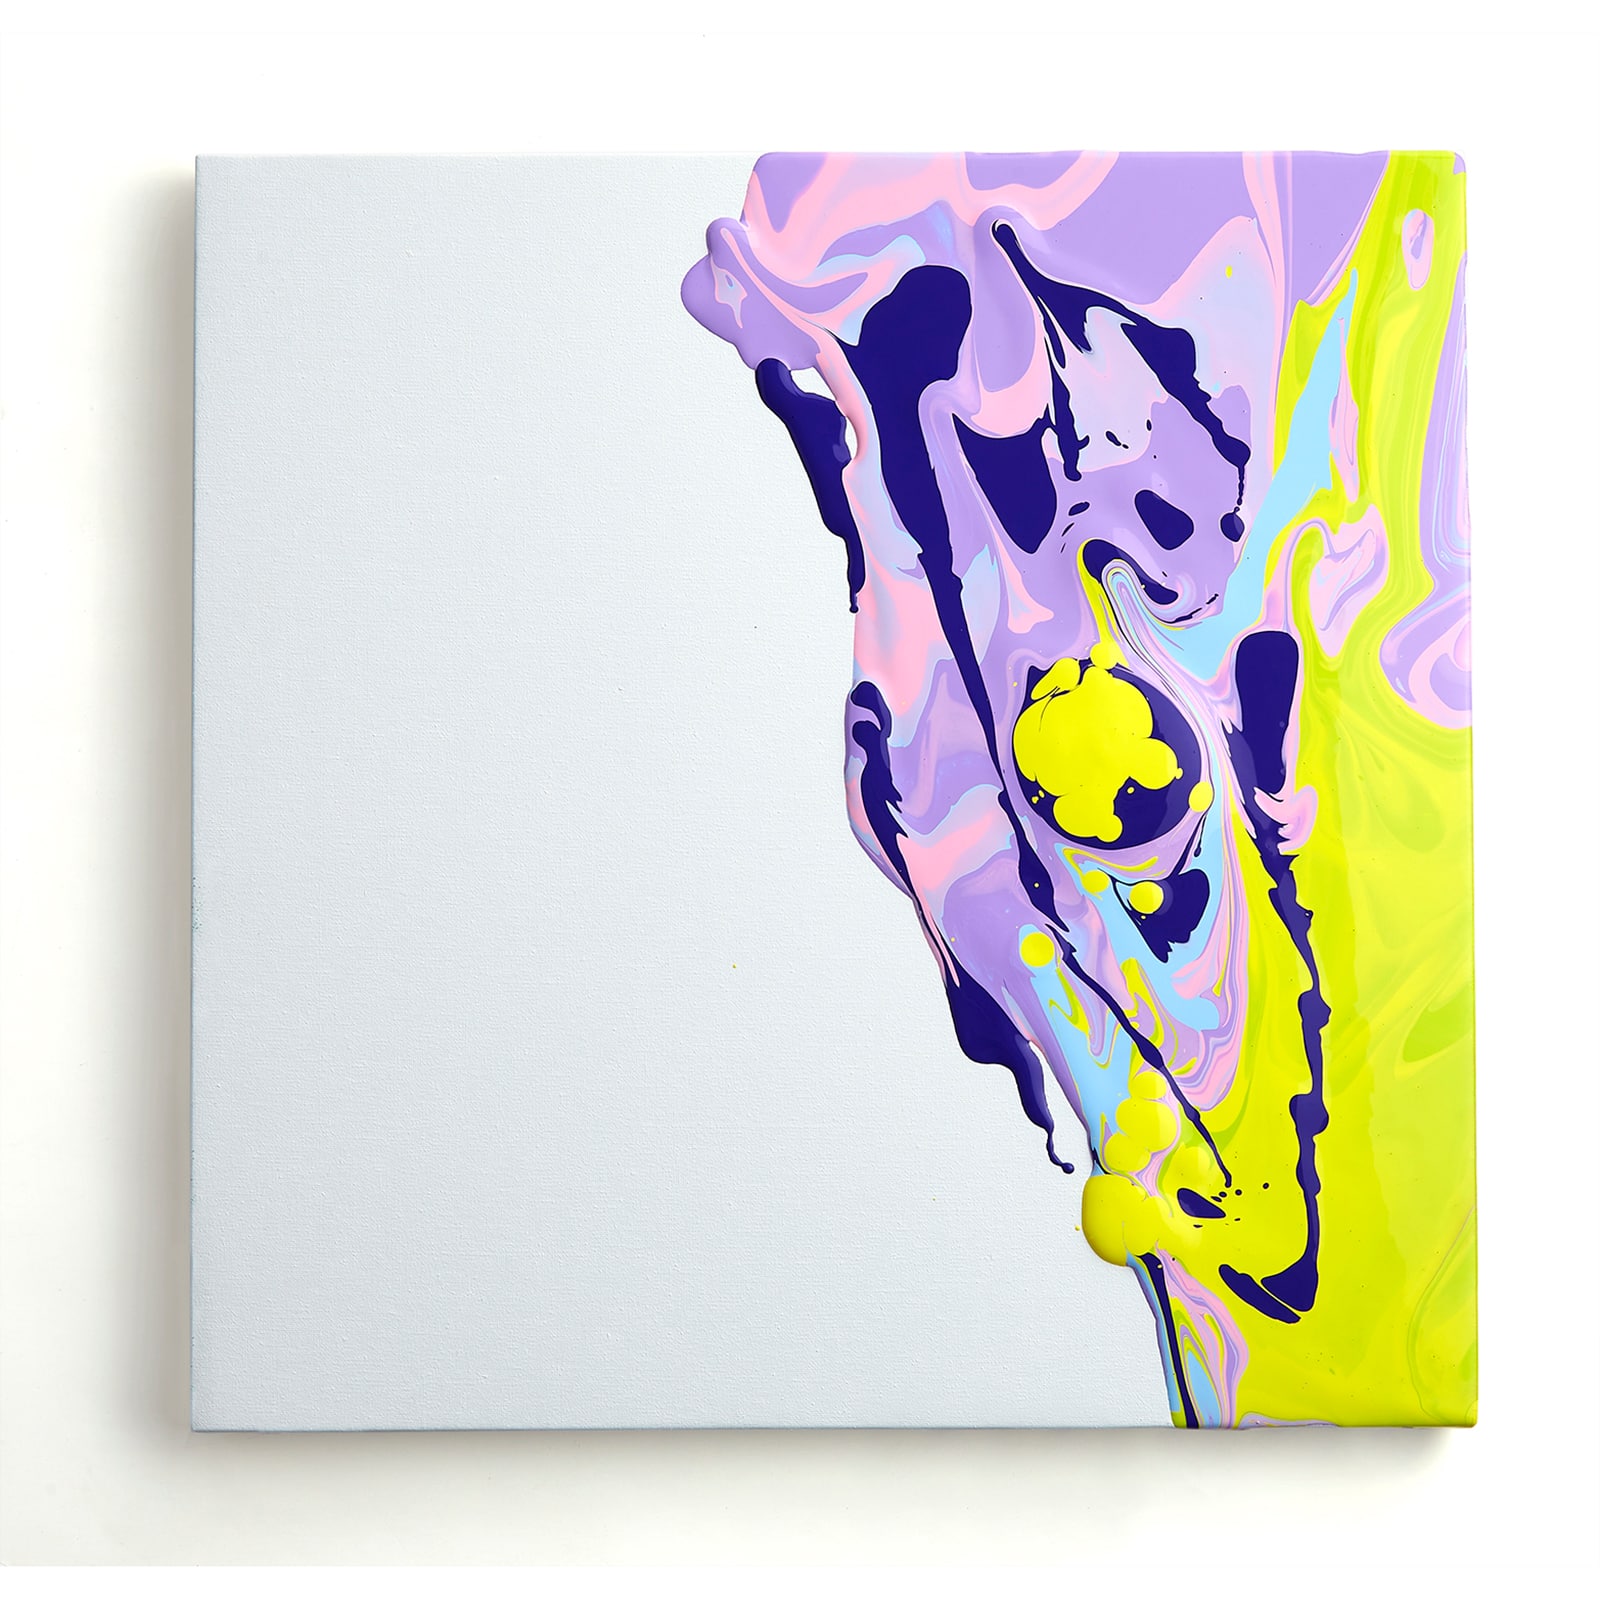 12 Pack: DecoArt&#xAE; Fluid Art Ready-To-Pour Acrylic&#x2122; Paint, 8oz.